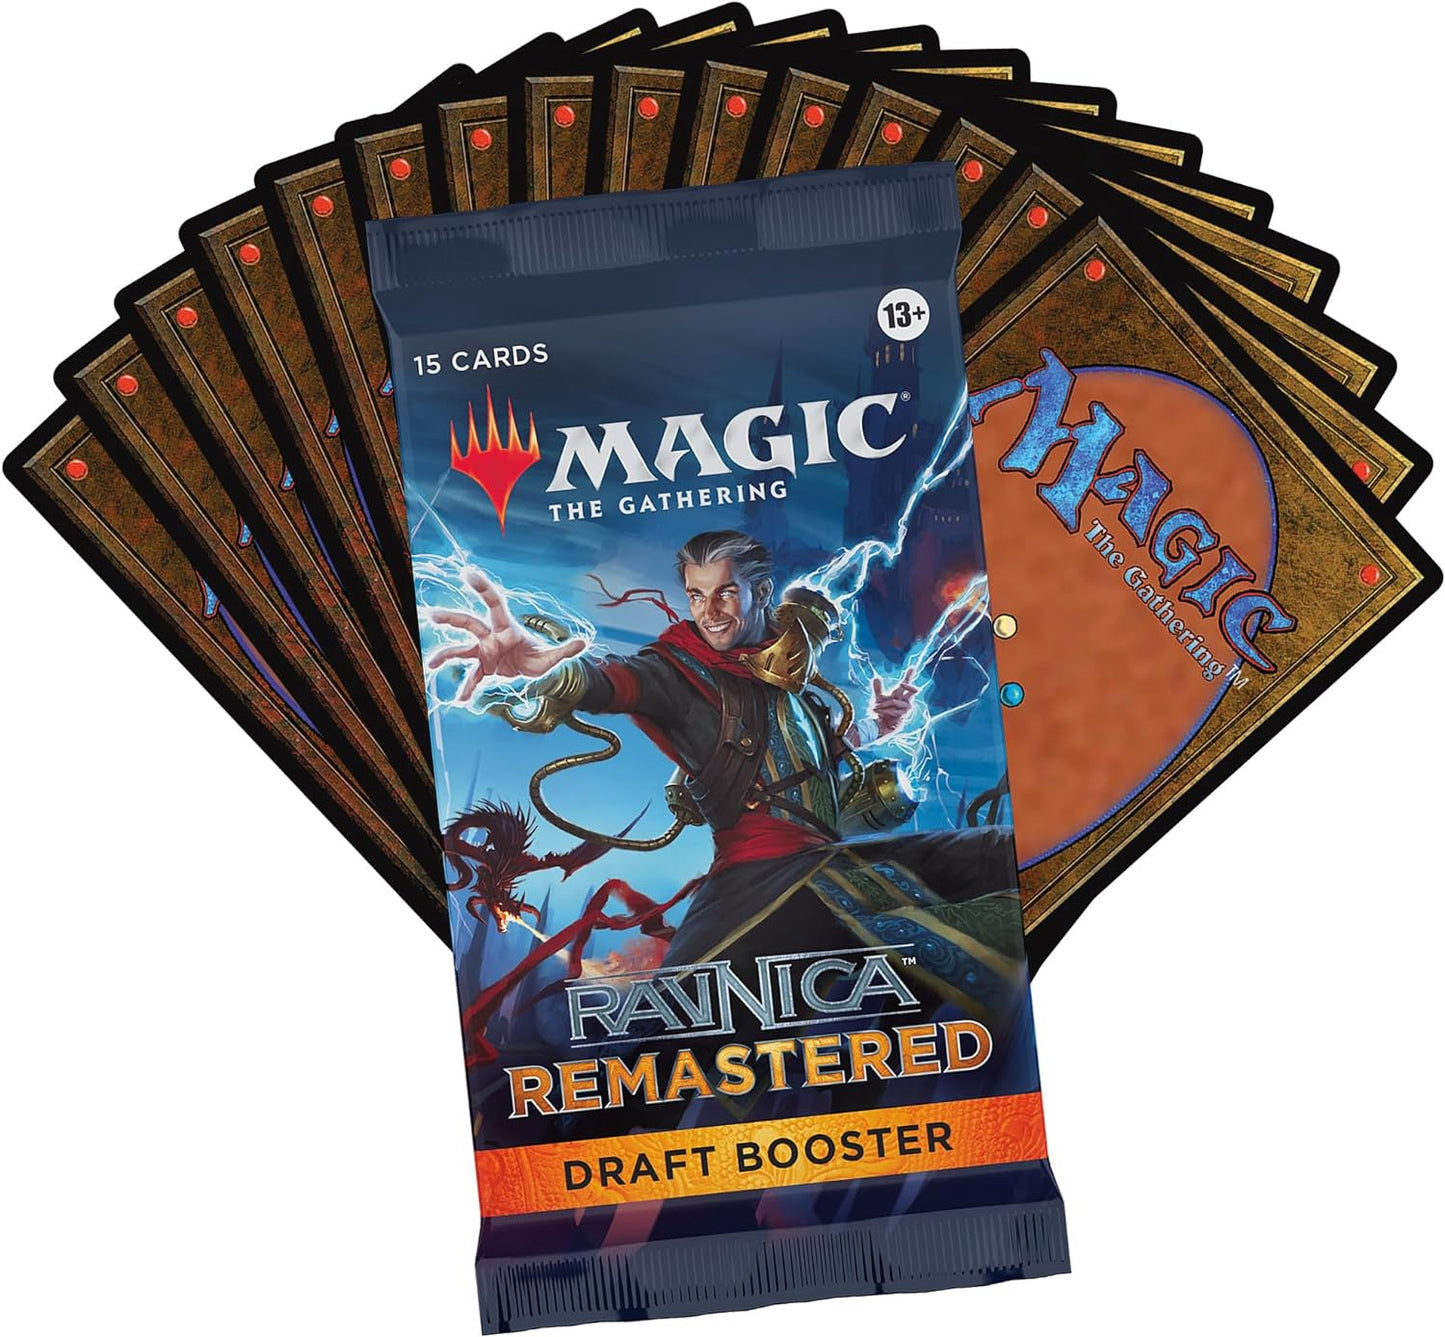 Magic the Gathering Ravinica Remastered Draft Booster decks